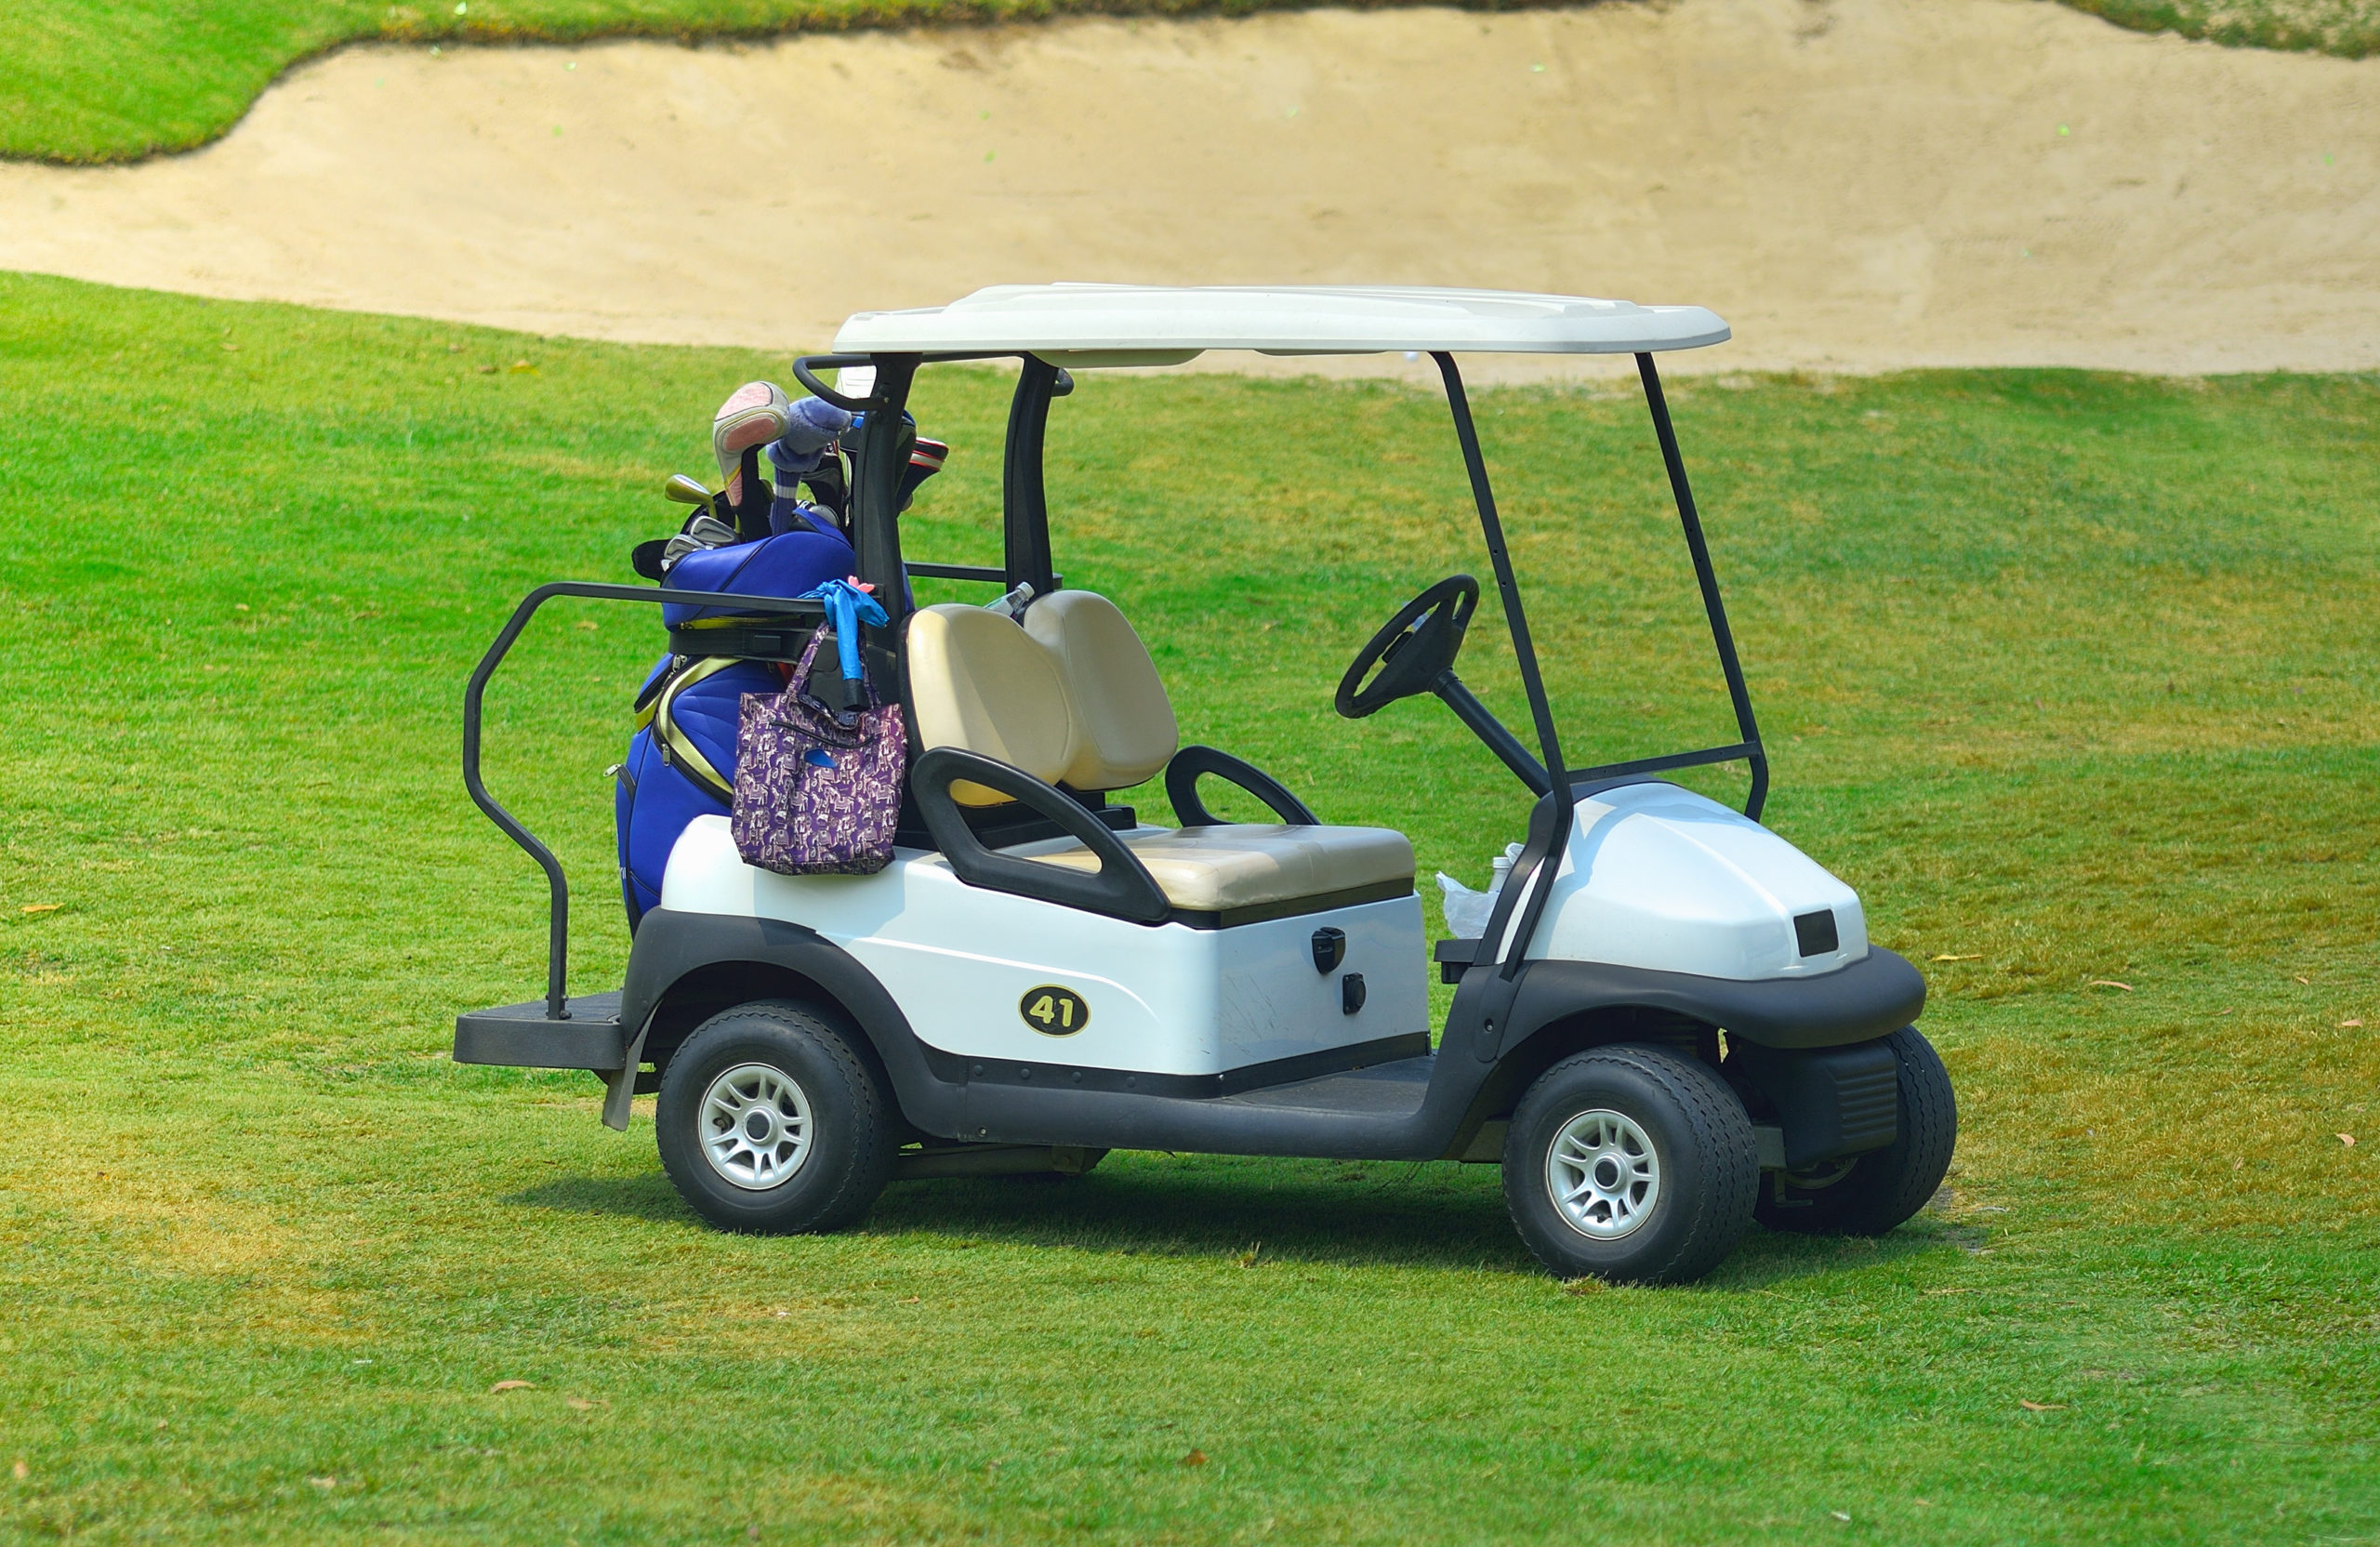 Golf Carts On A Golf Course 2021 09 03 19 01 48 Utc Scaled